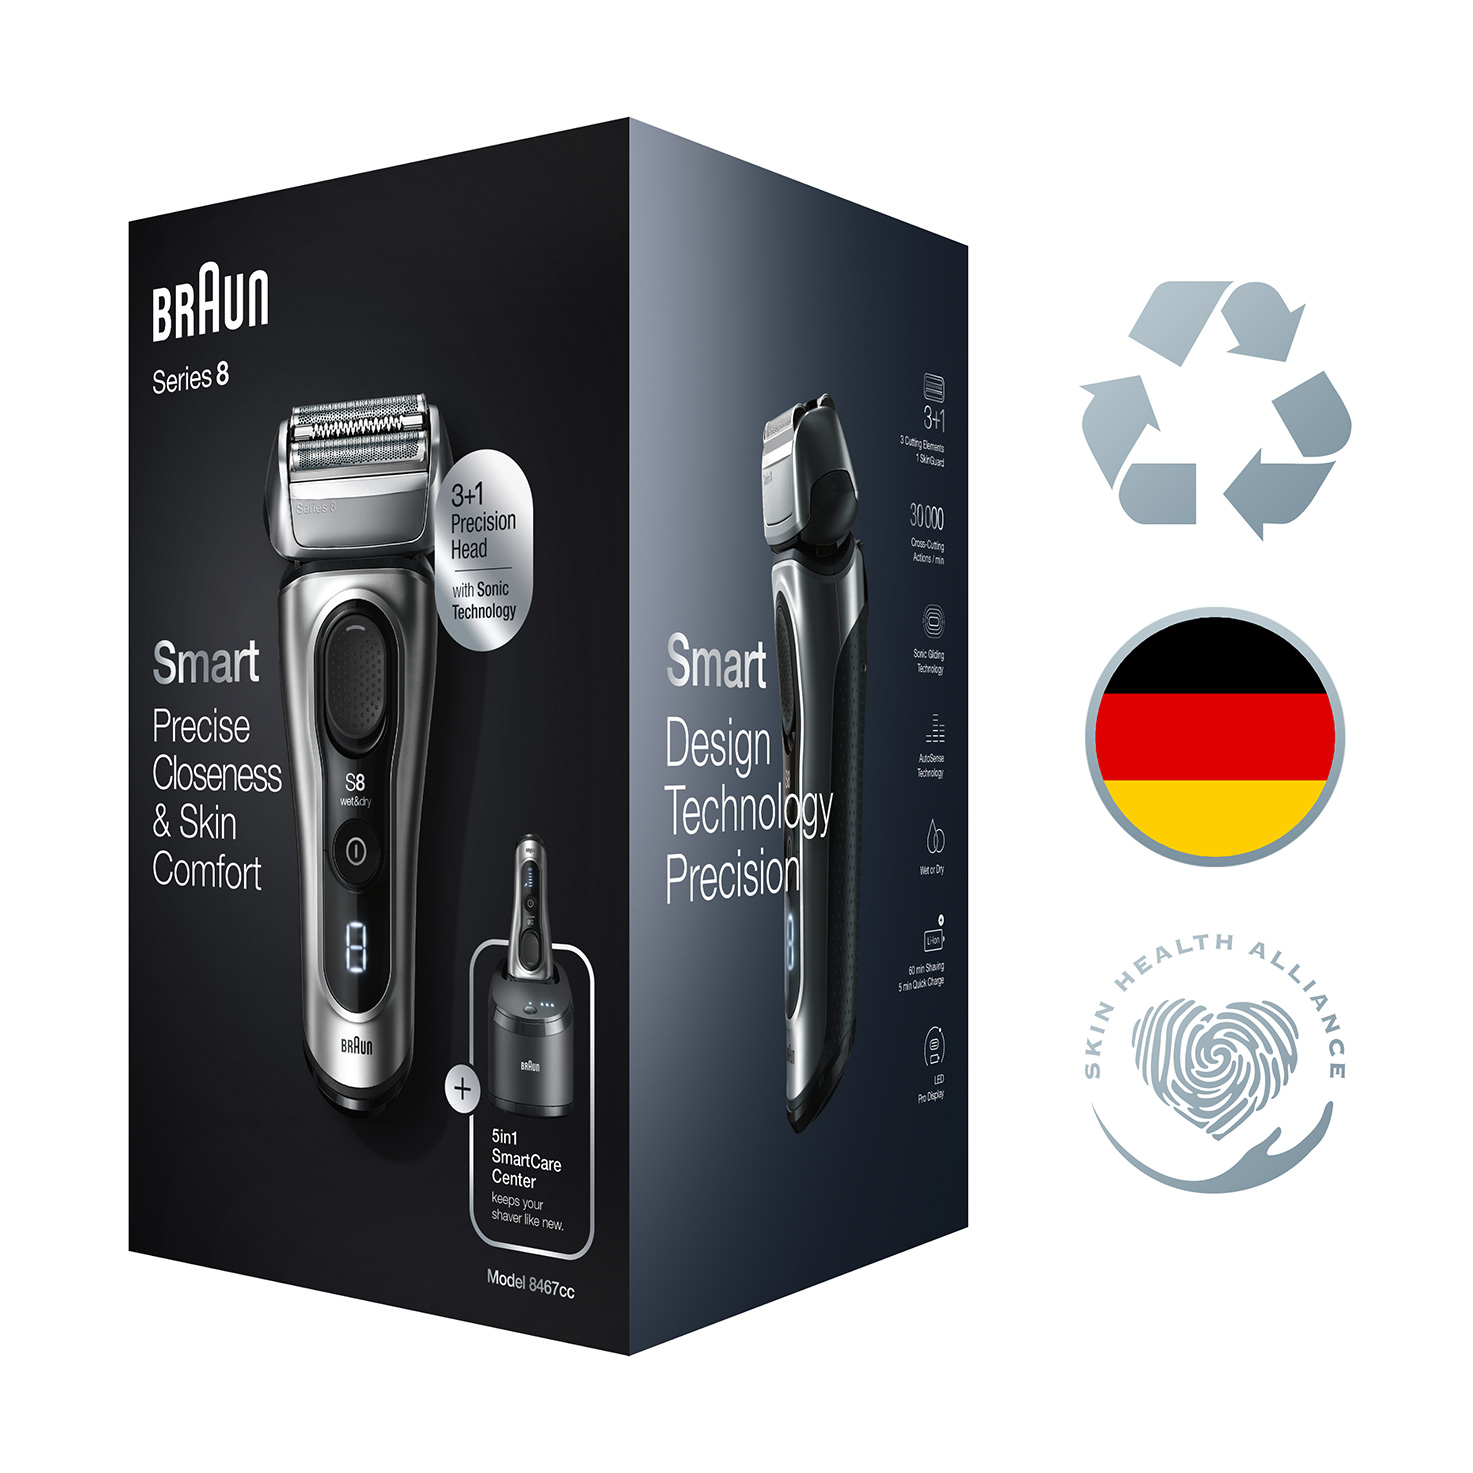 Braun Series 8 battery shaver collection | Braun SG